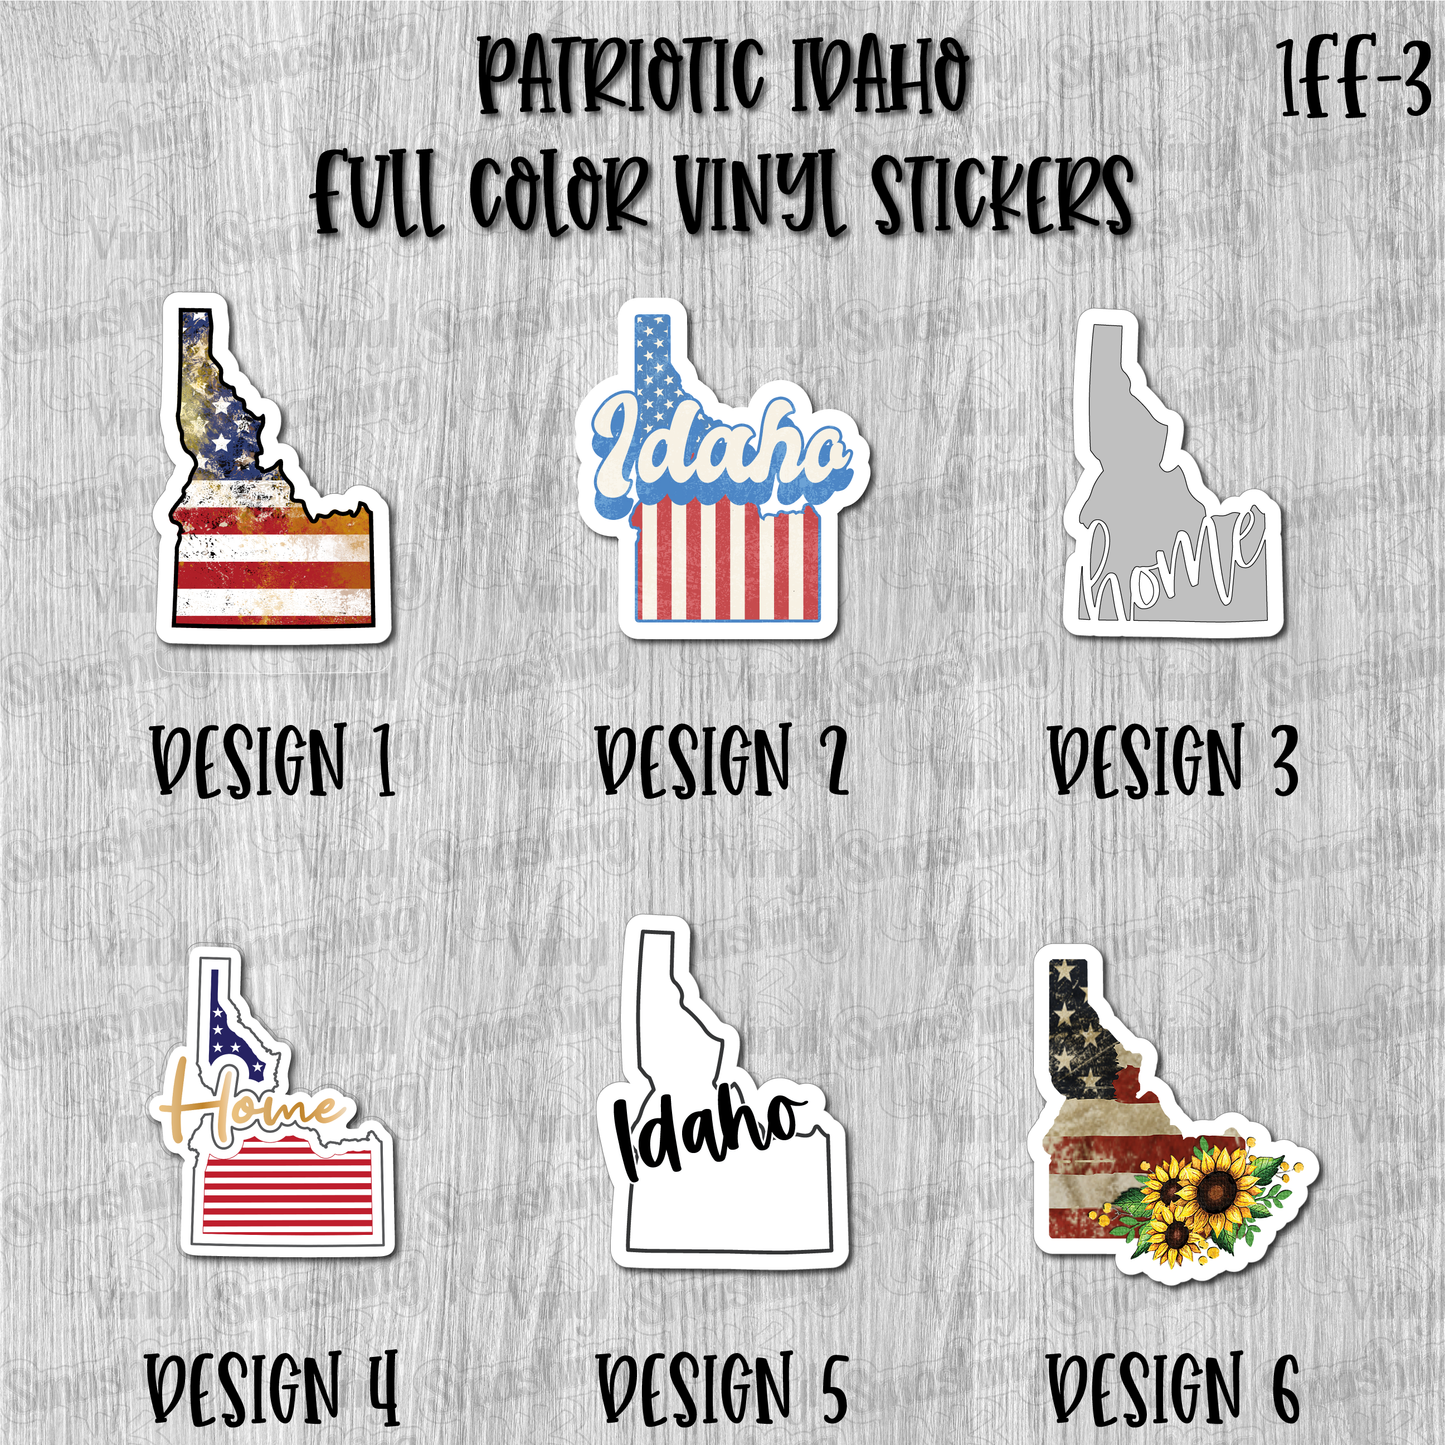 Patriotic Idaho - Full Color Vinyl Stickers (SHIPS IN 3-7 BUS DAYS)